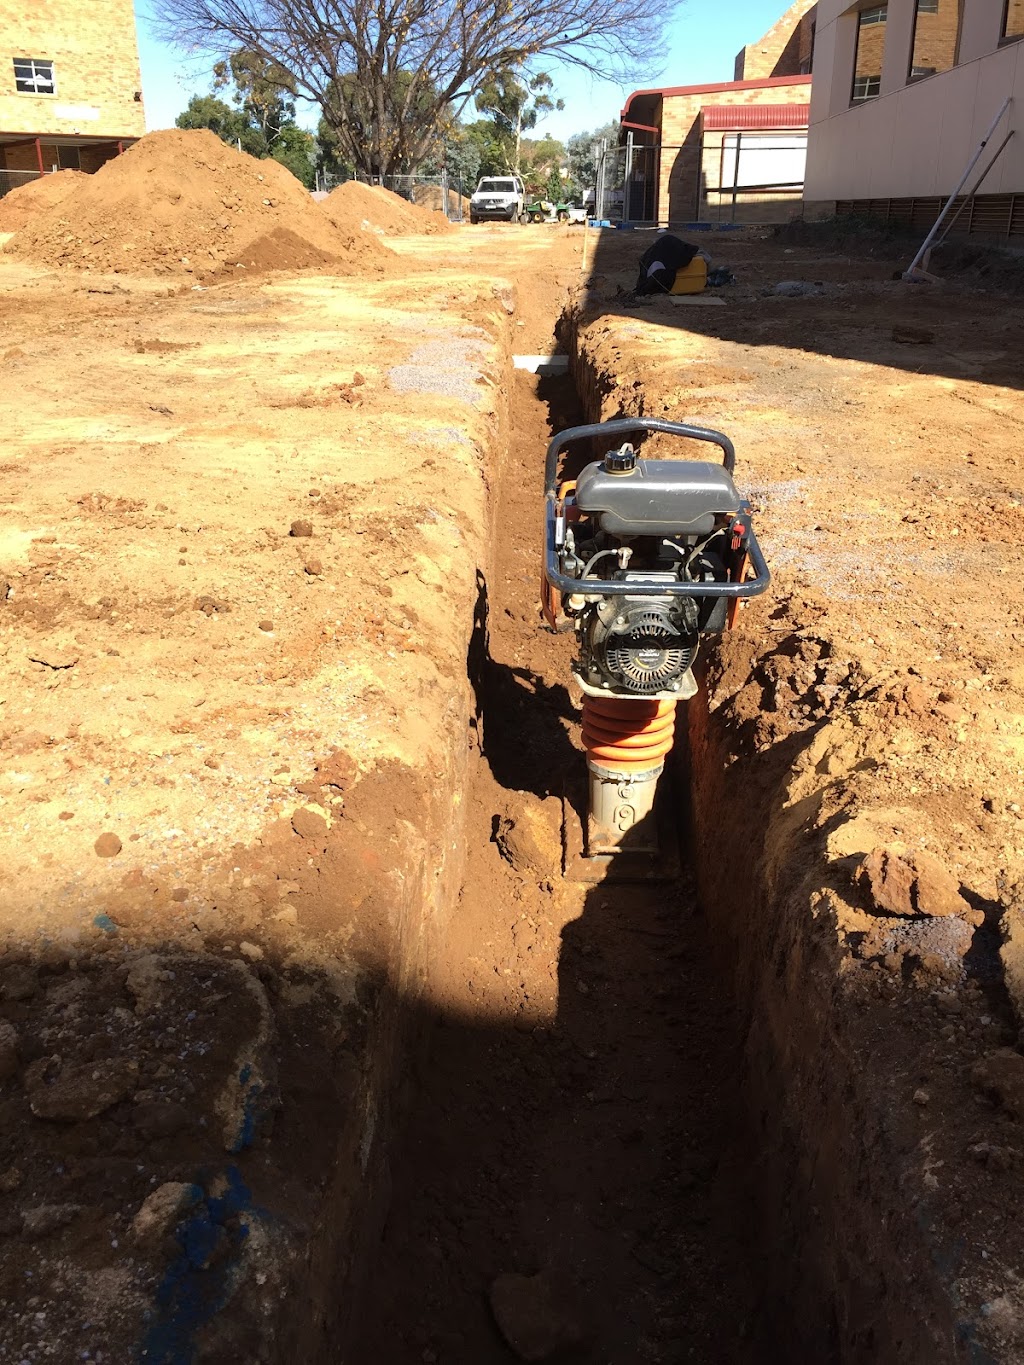 Pipeline Plumbing & Excavations | plumber | 159 Argyle St, Moss Vale NSW 2577, Australia | 0499449186 OR +61 499 449 186